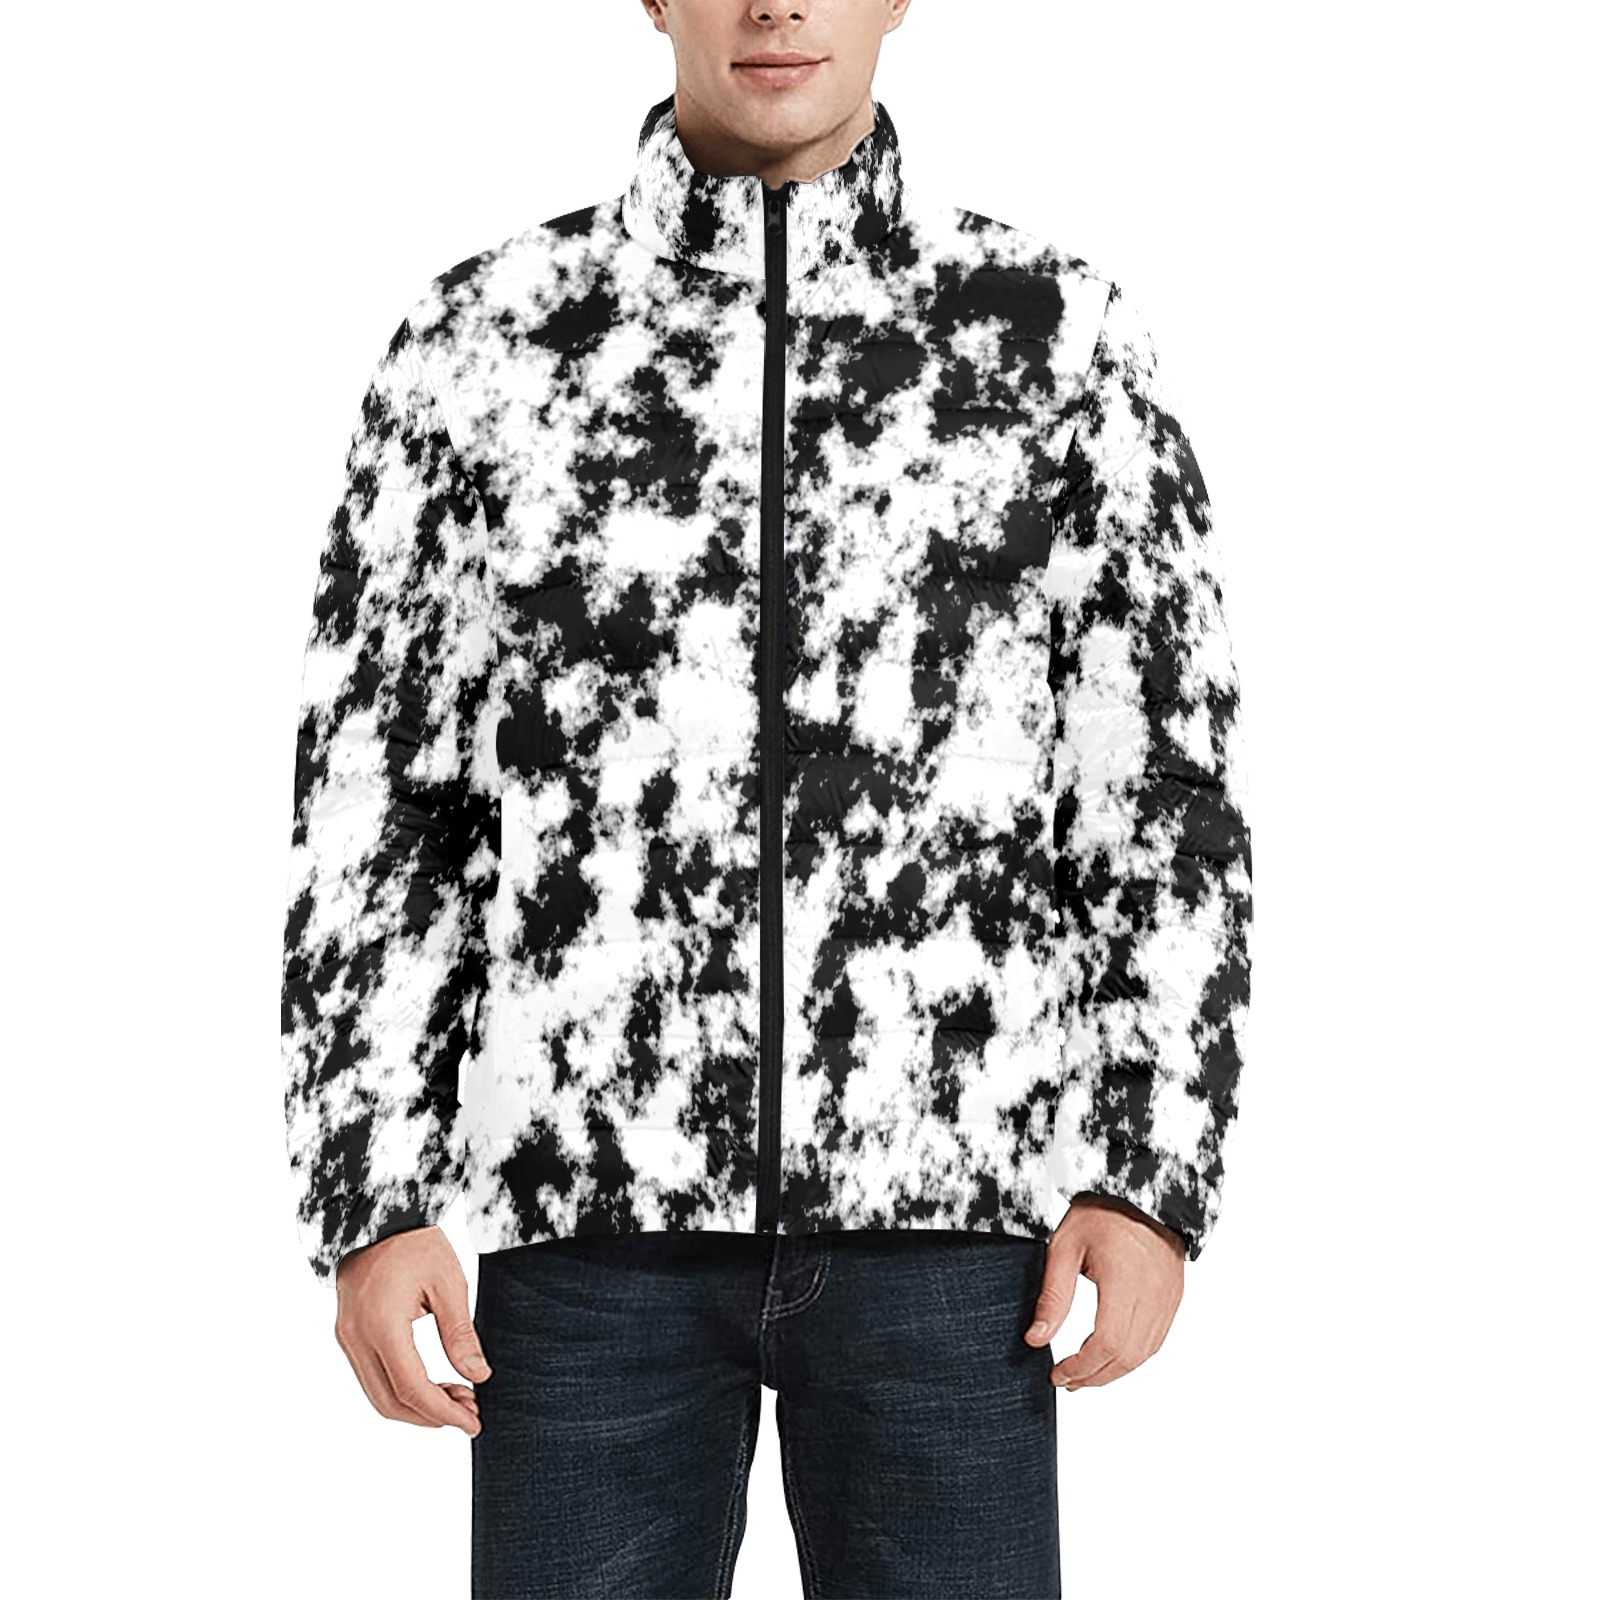 Abstract Scattered Grunge Dye Black White Men's Stand Collar Padded Jacket (Model H41)